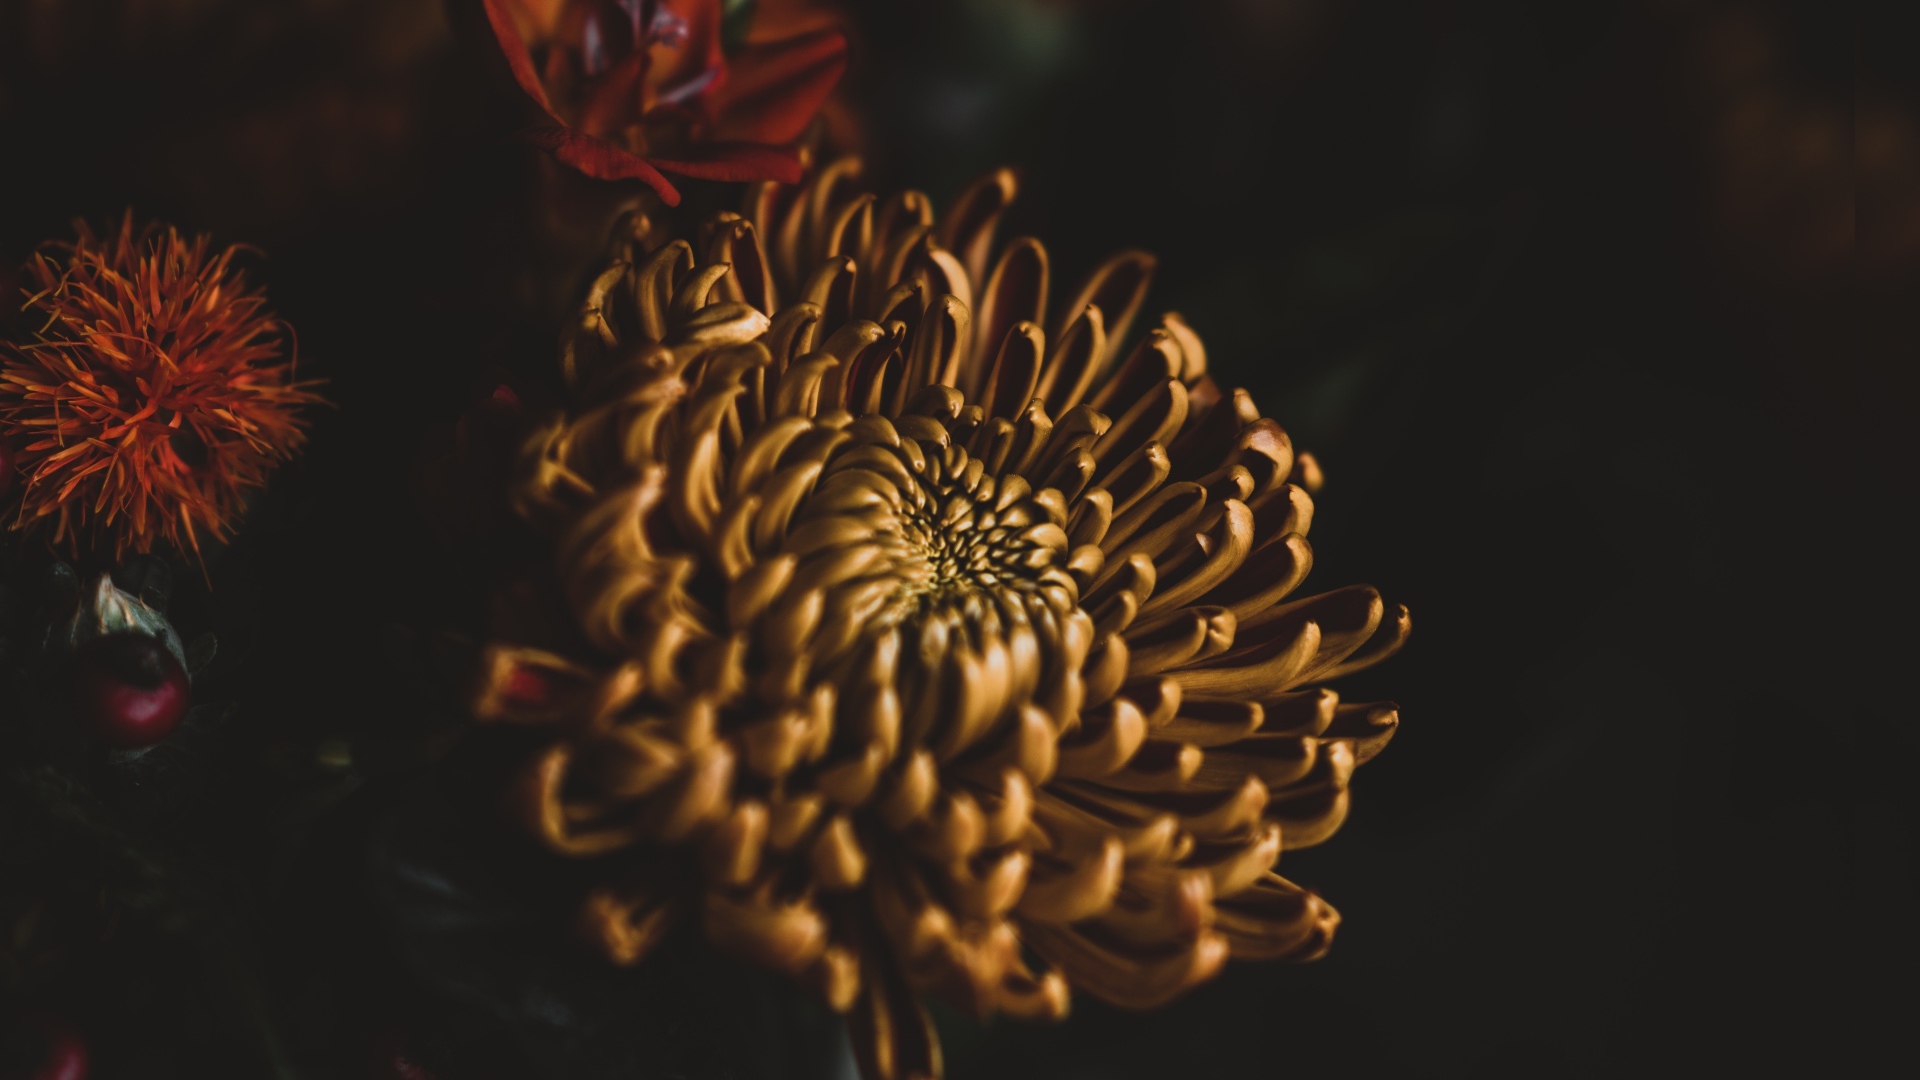 Yellow Chrysanthemum Flower Closeup